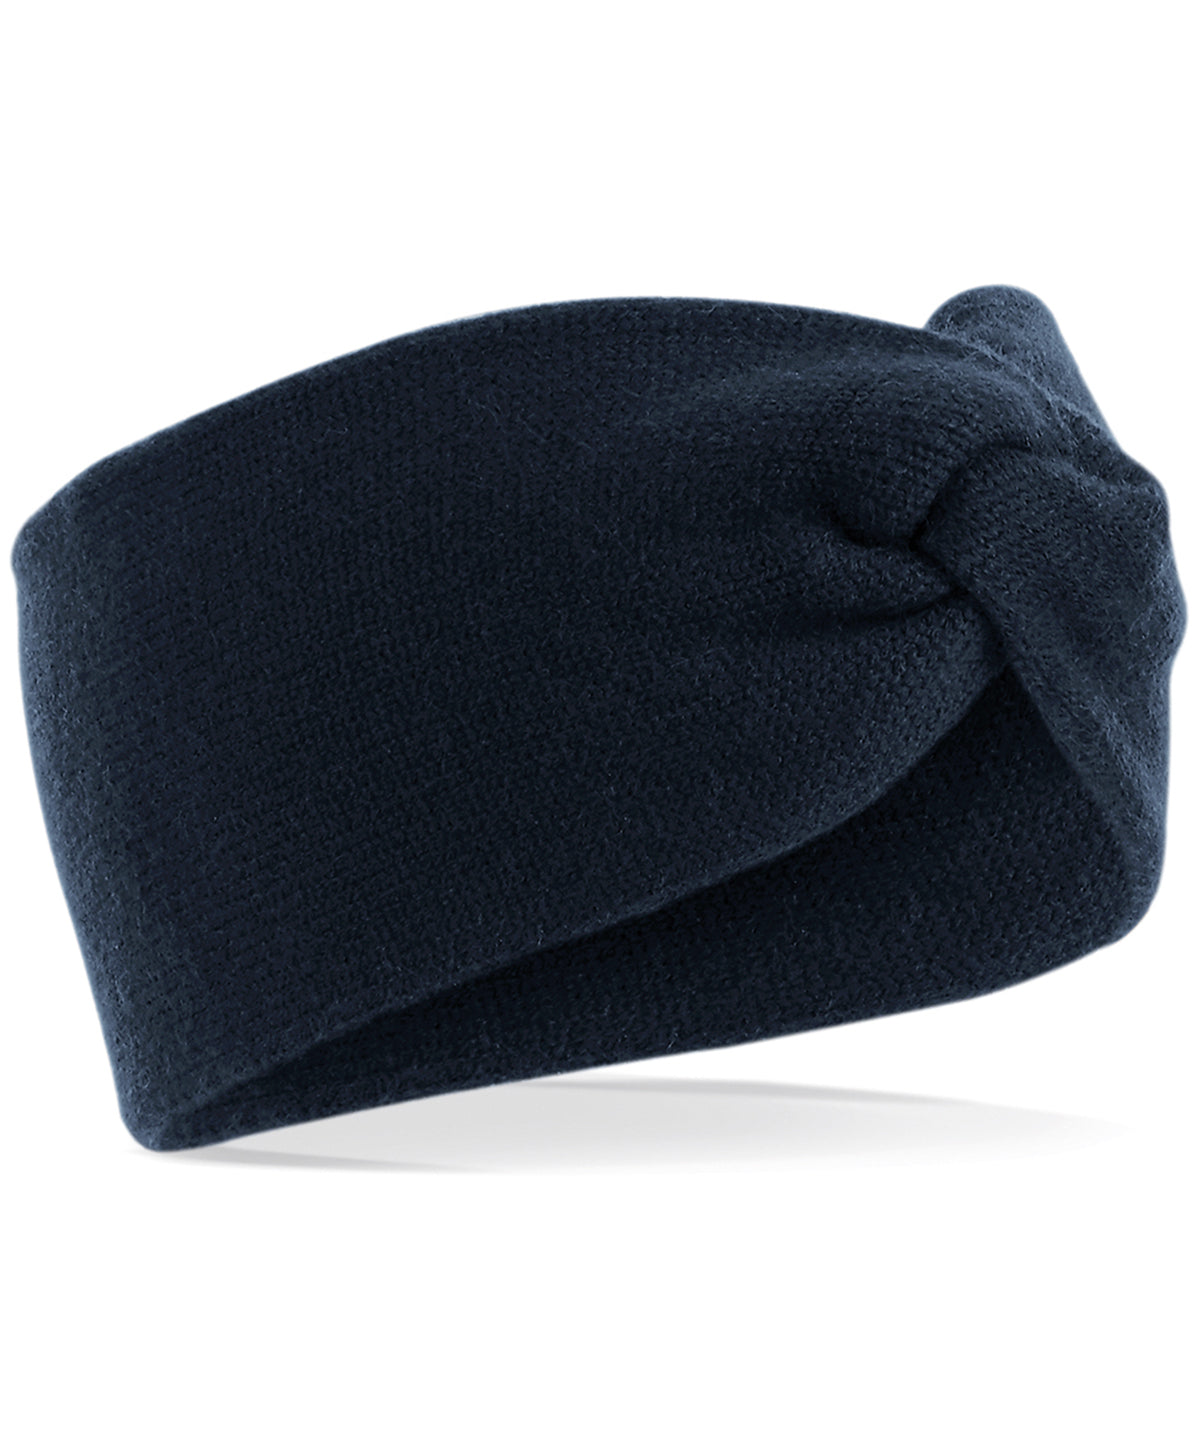 Personalised Headbands - Navy Beechfield Twist knit headband